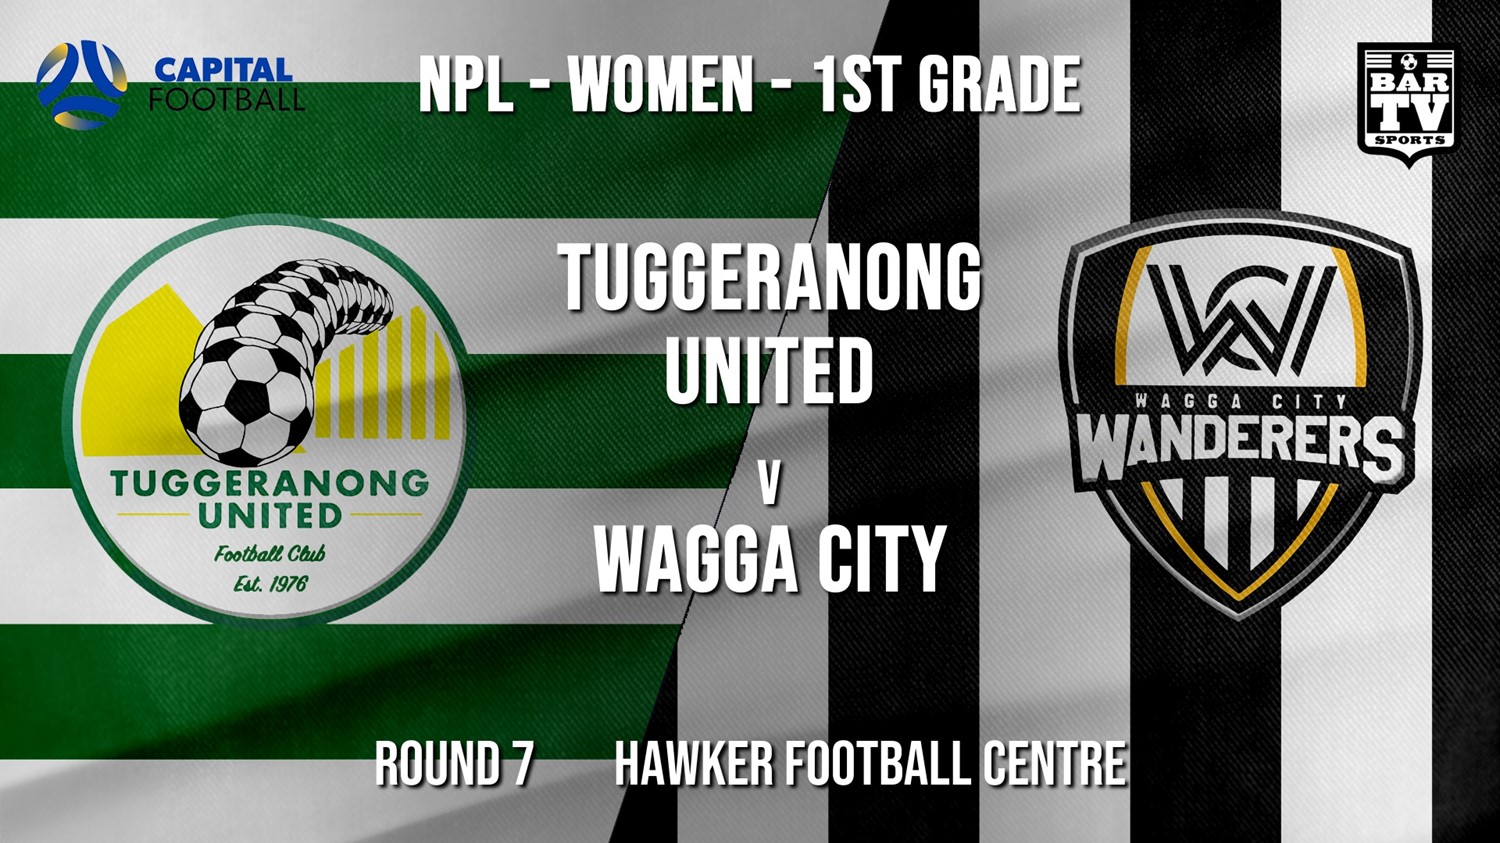 NPLW - Capital Round 7 - Tuggeranong United FC (women) v Wagga City Wanderers FC (women) Minigame Slate Image